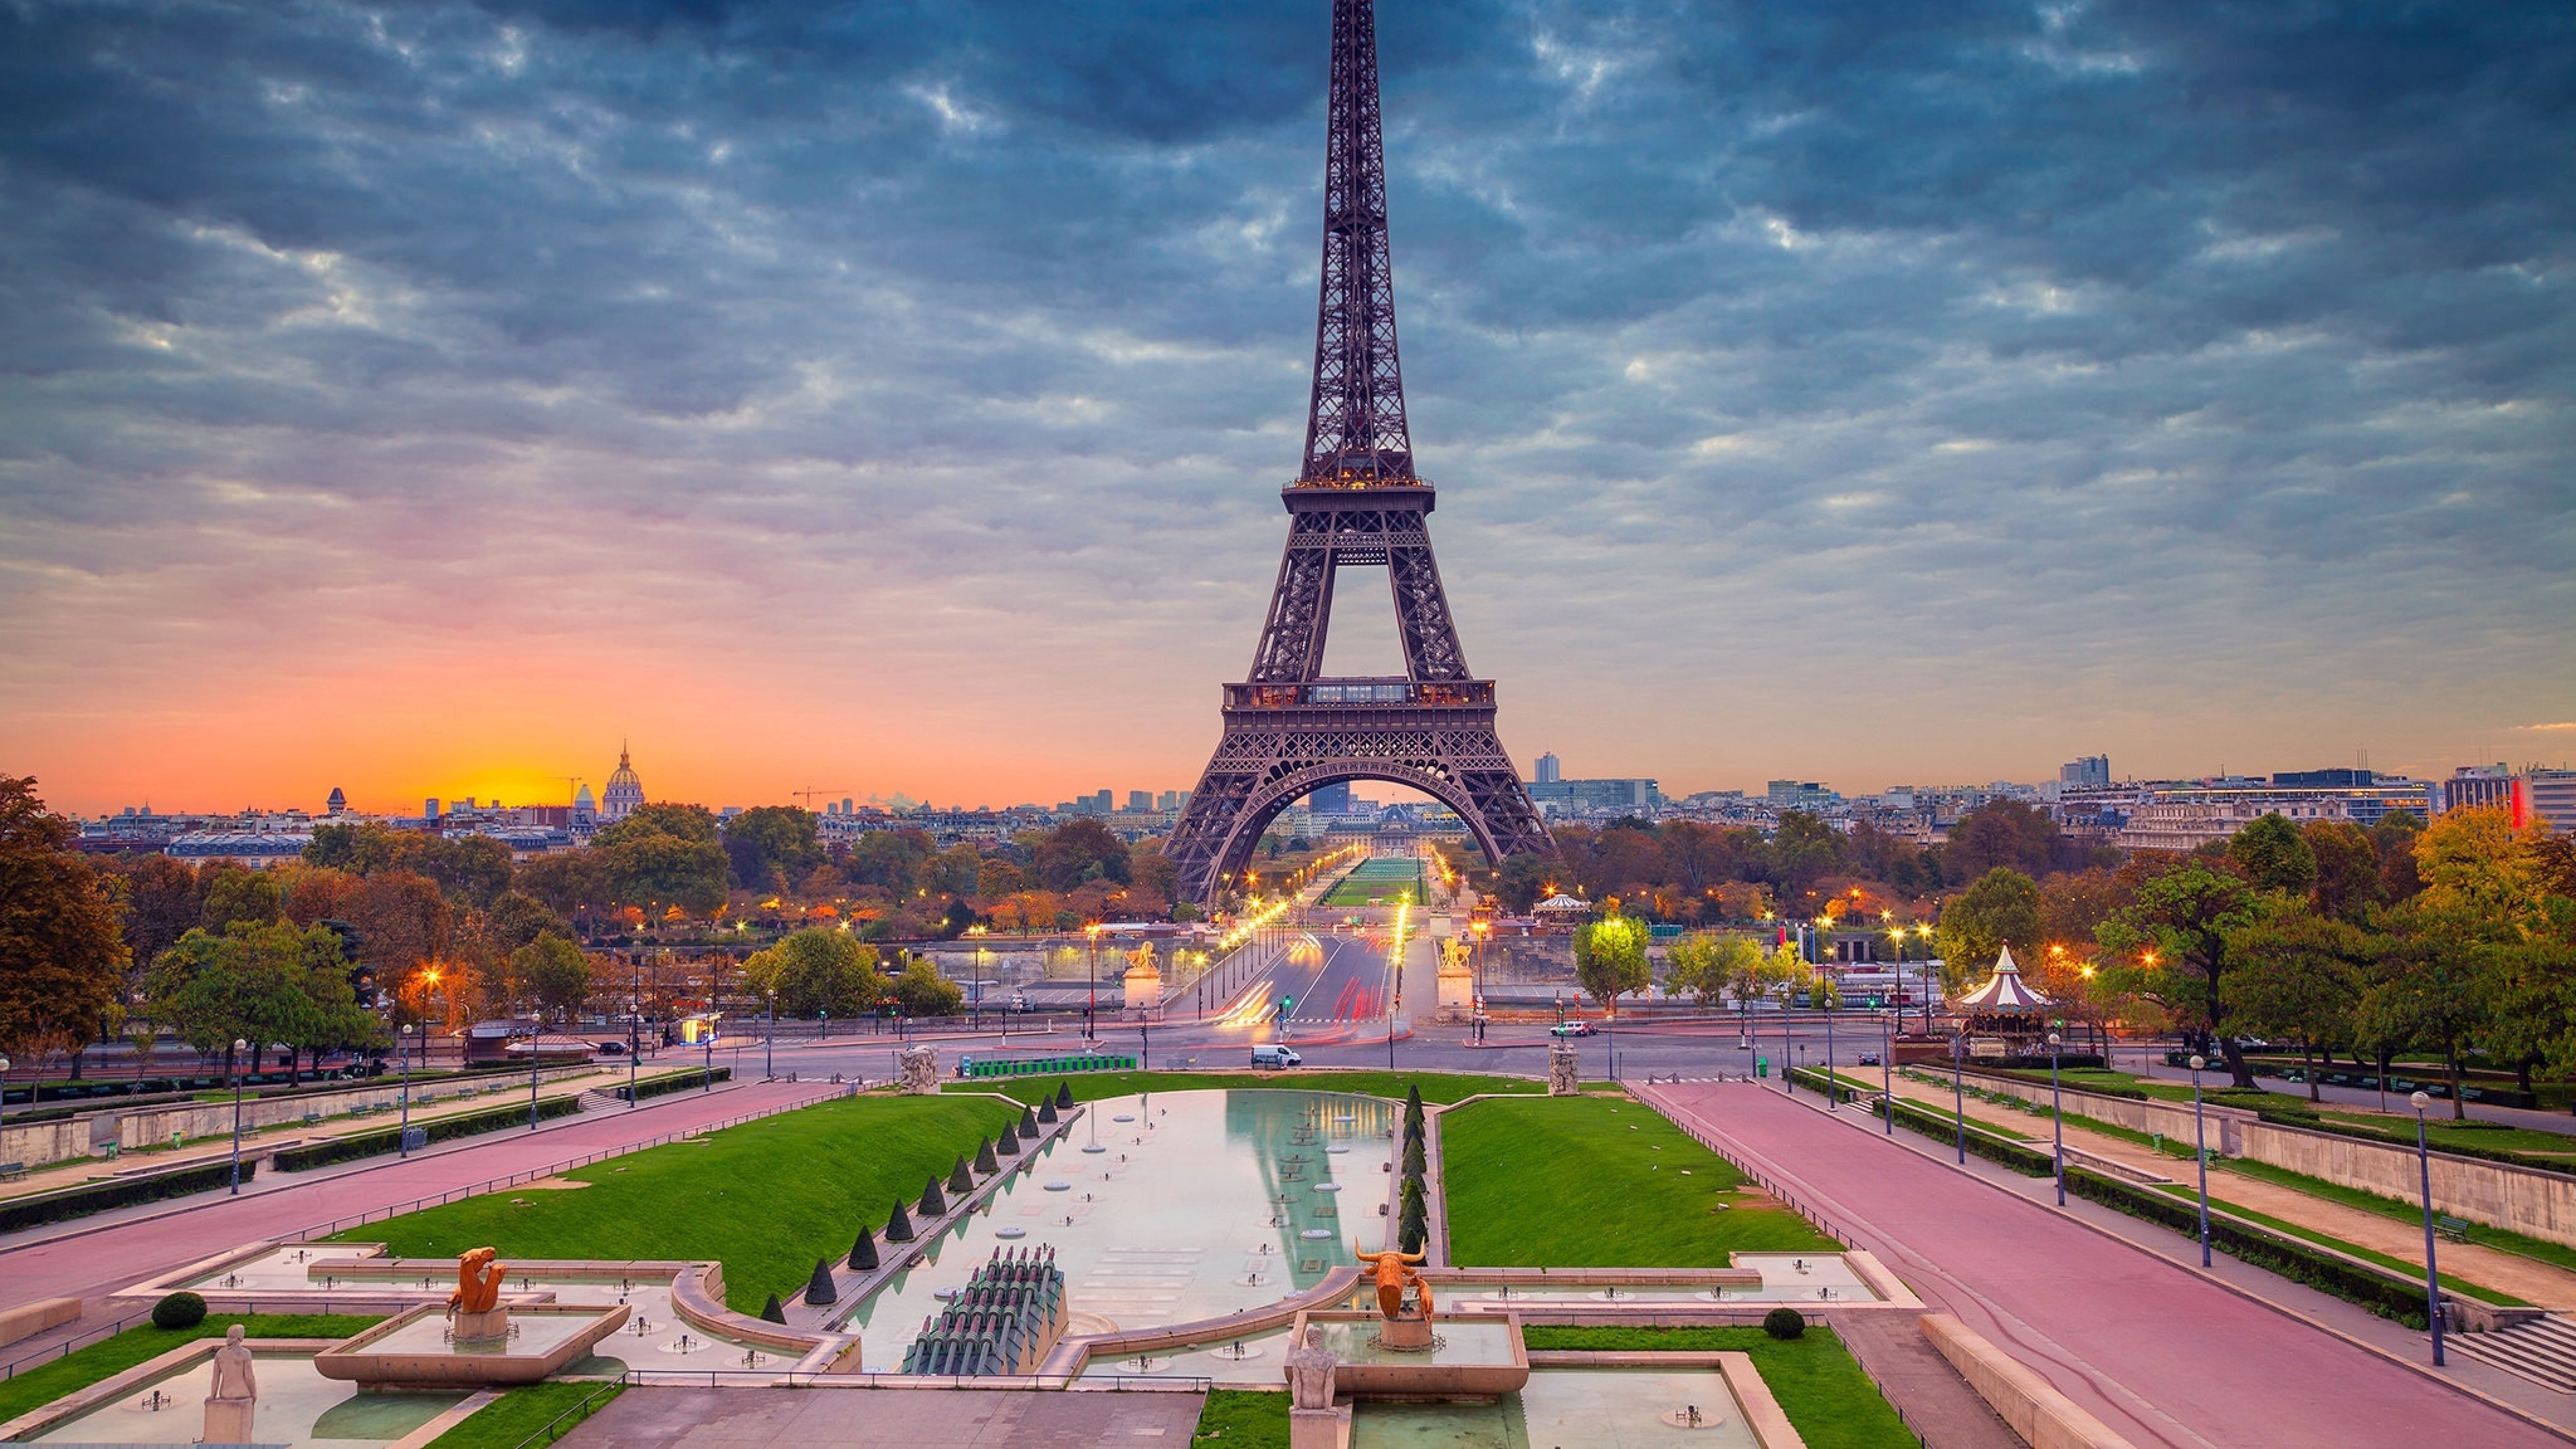 Eiffel Tower Paris Beautiful View 8K Wallpaper, HD City 4K Wallpaper, Image, Photo and Background